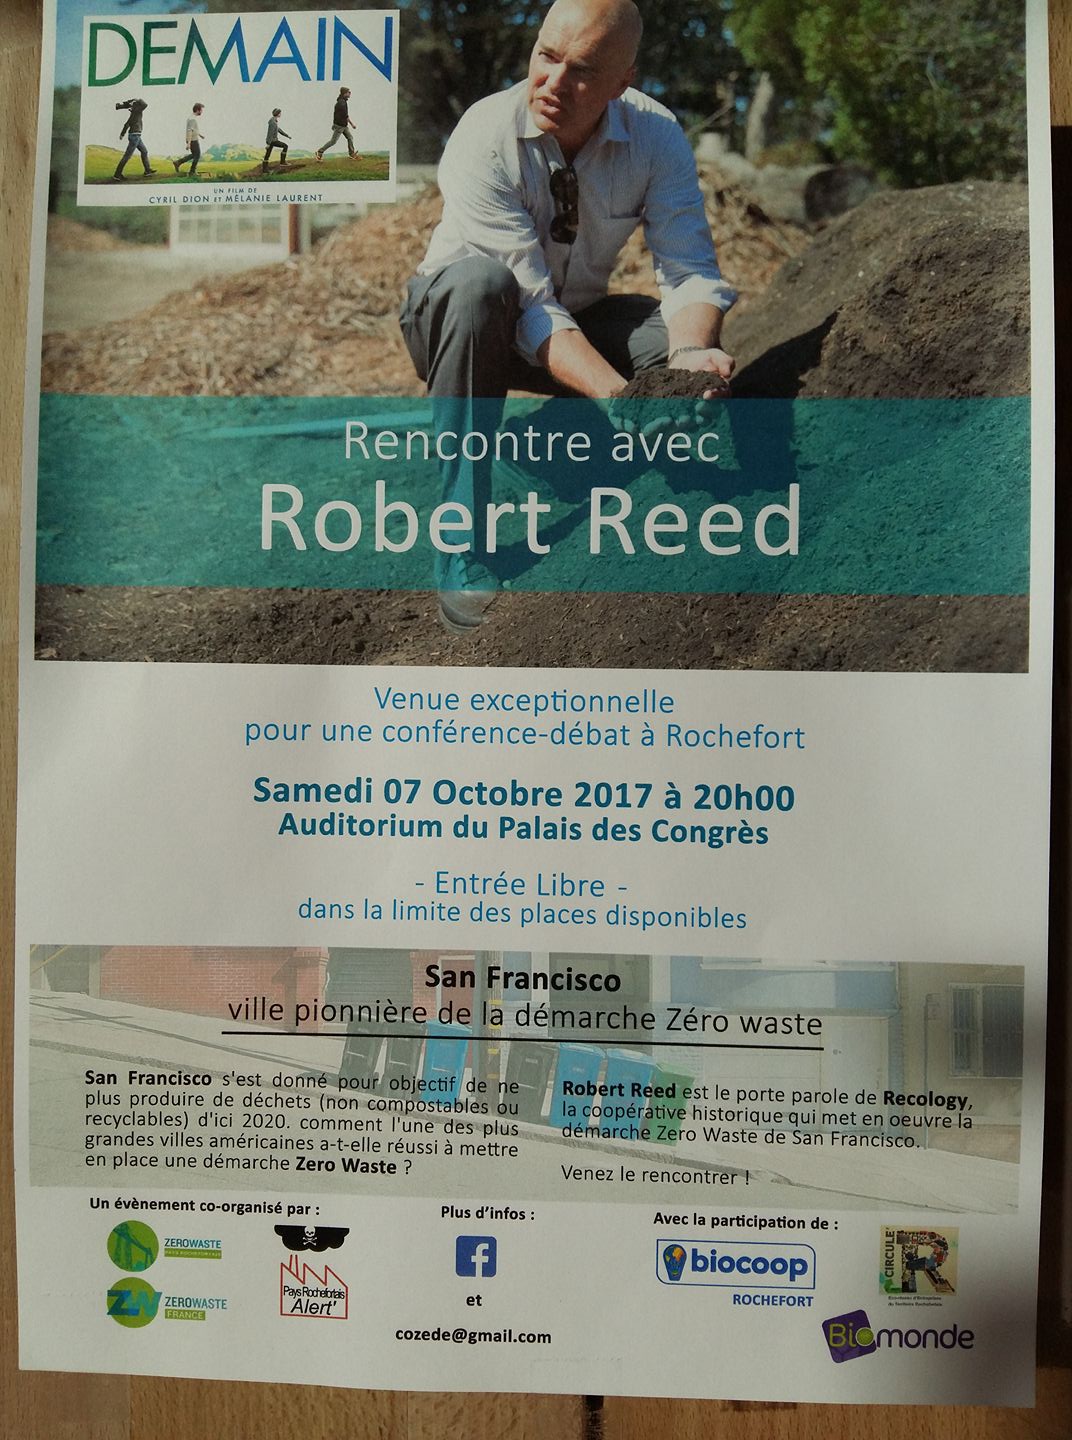 ROBERT REED en conférence à Rochefort le 7 octobre